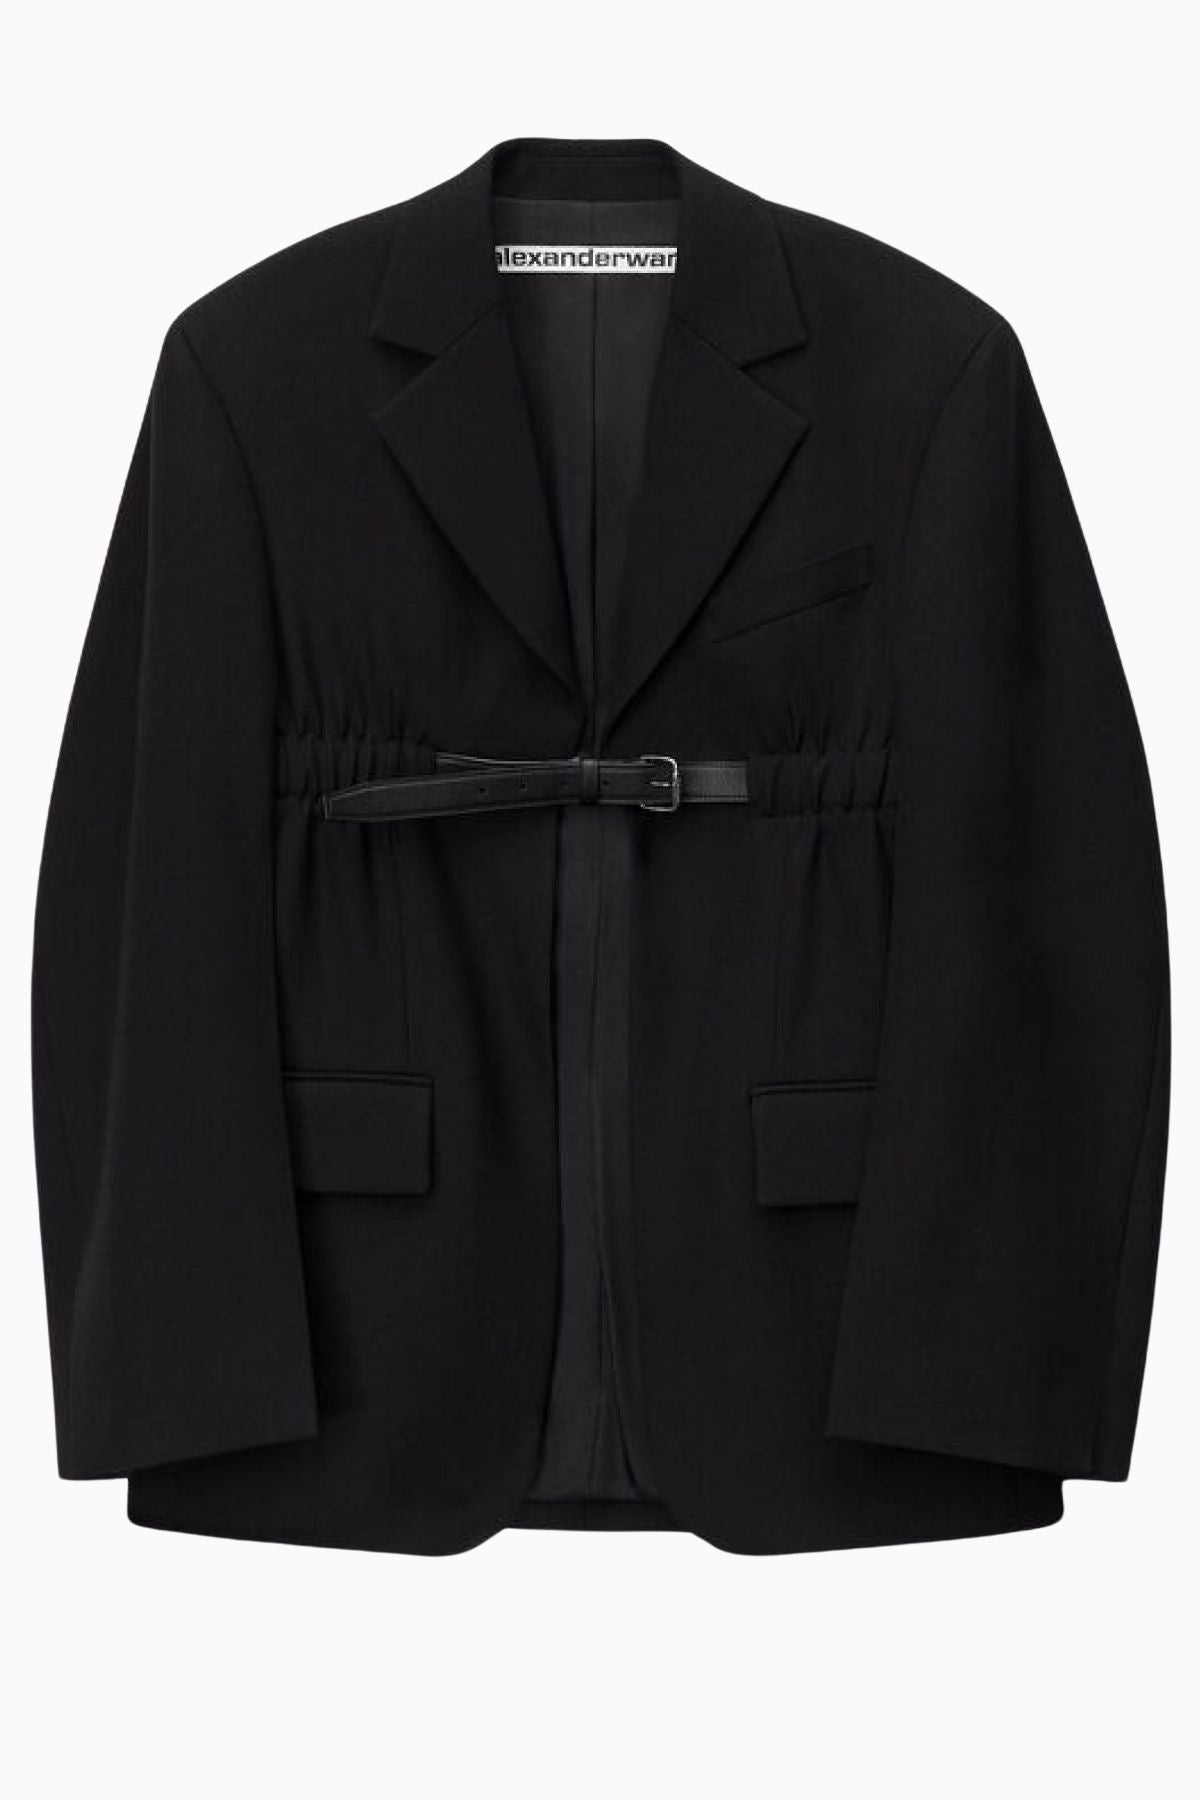 Alexander Wang Leather Belted Blazer - Black